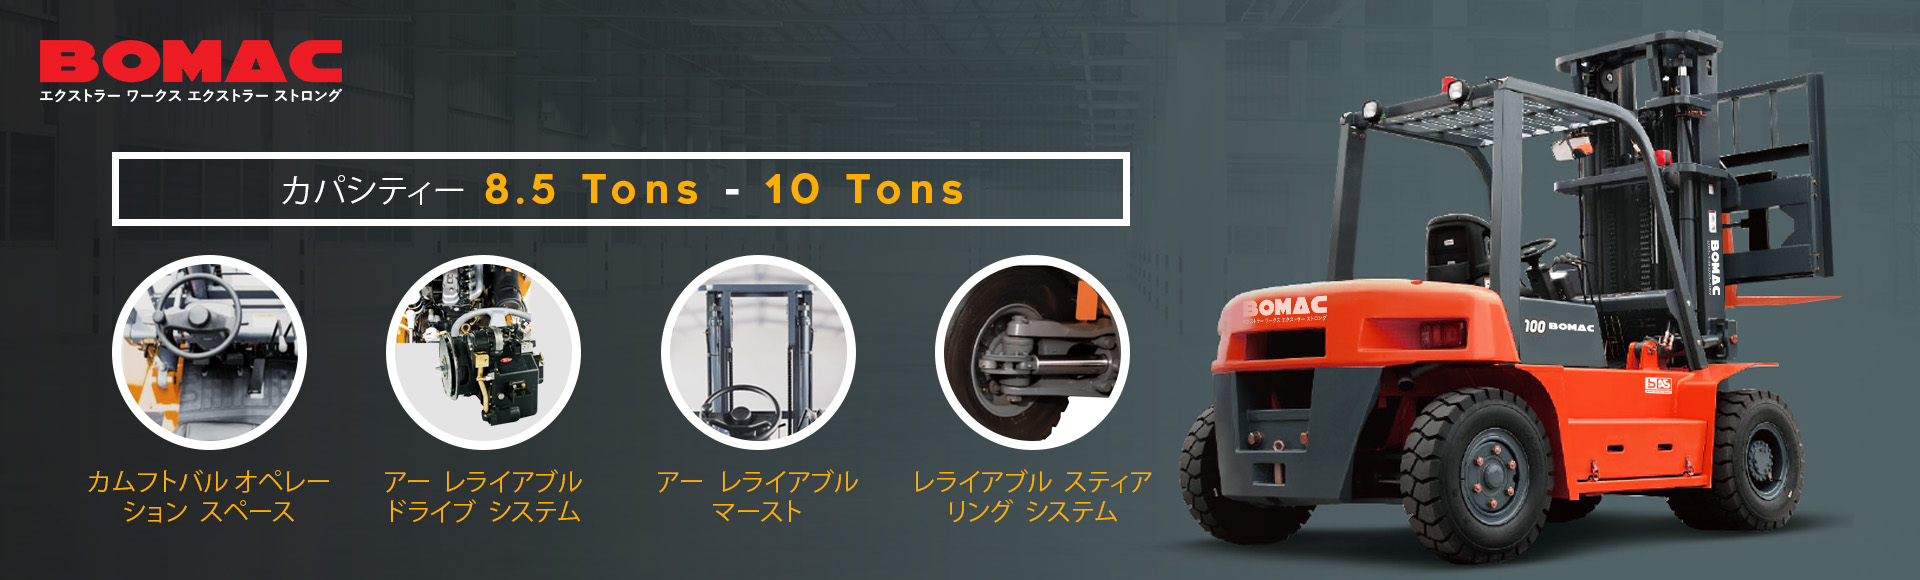 Banner Bomac Forklift Japan 8.5 TON - 10 TON Japan Ver 2